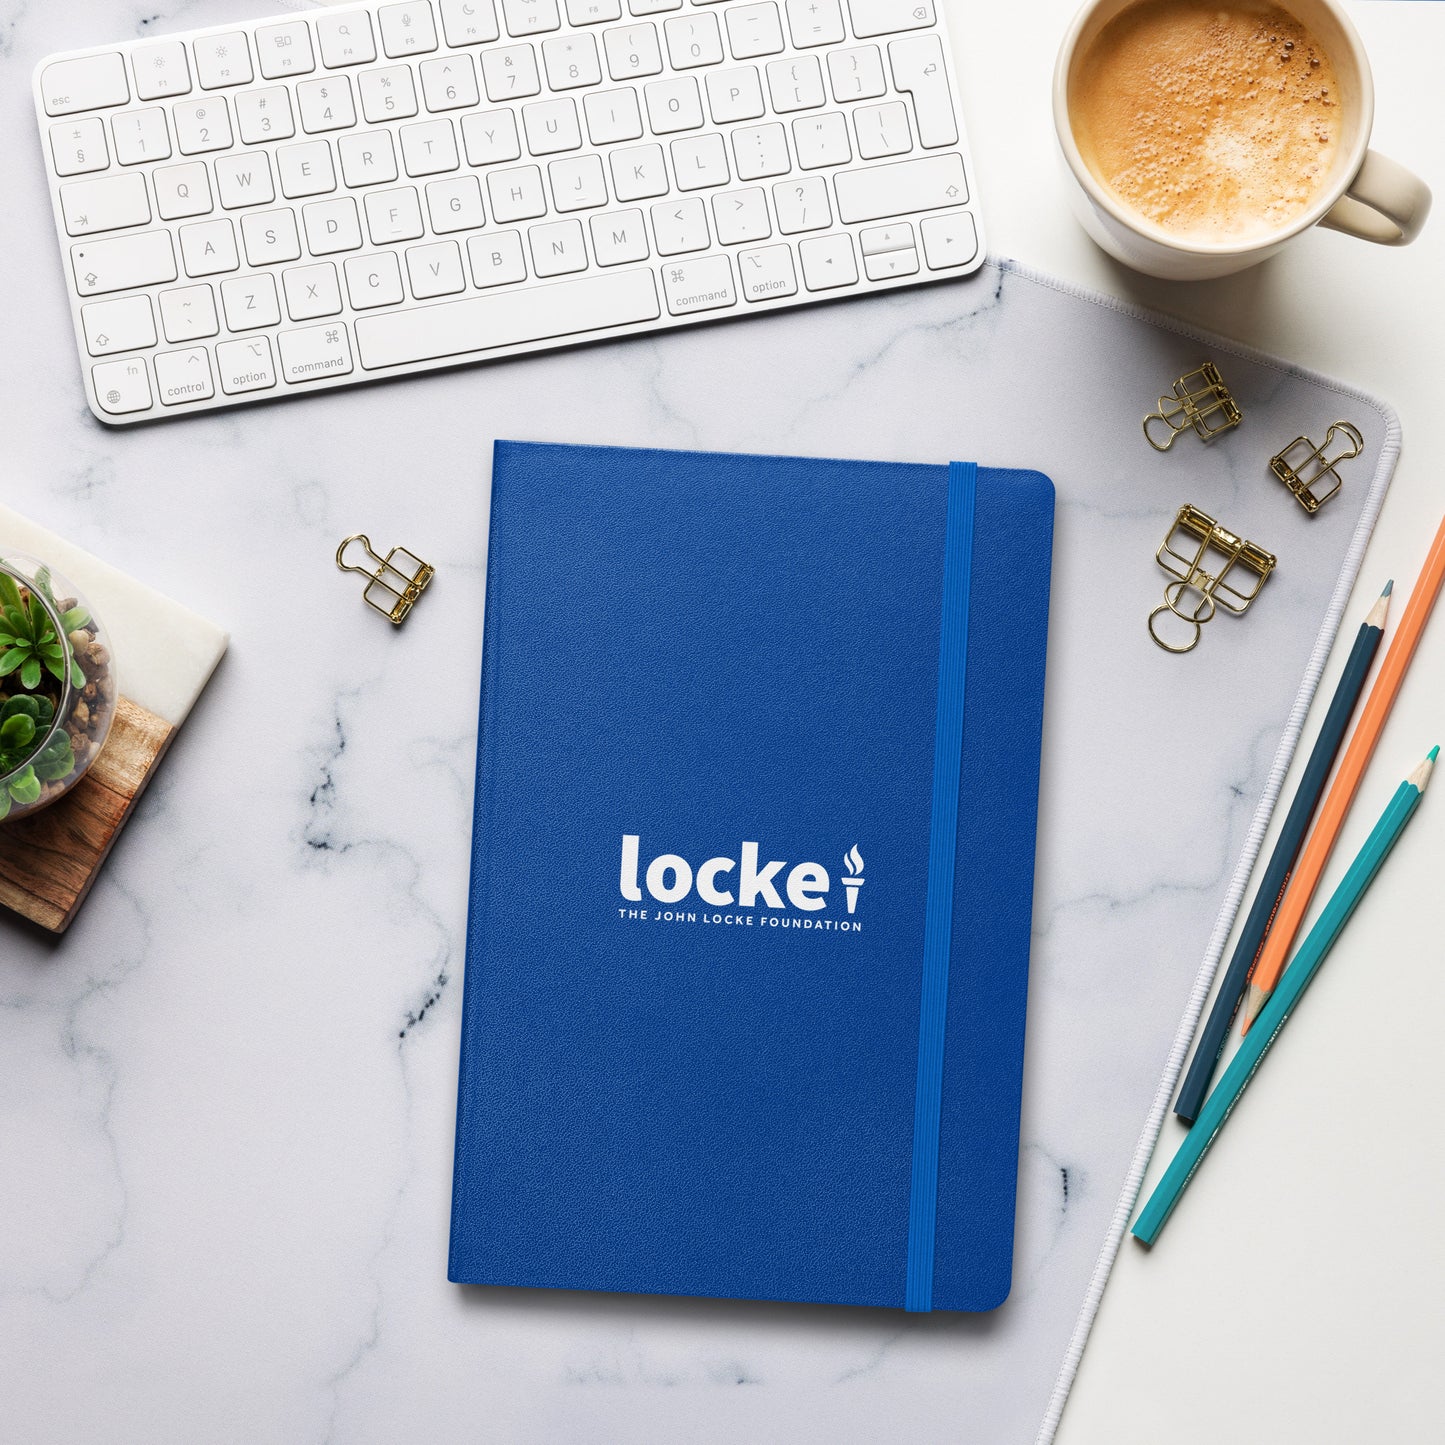 John Locke Foundation Hardcover Bound Notebook